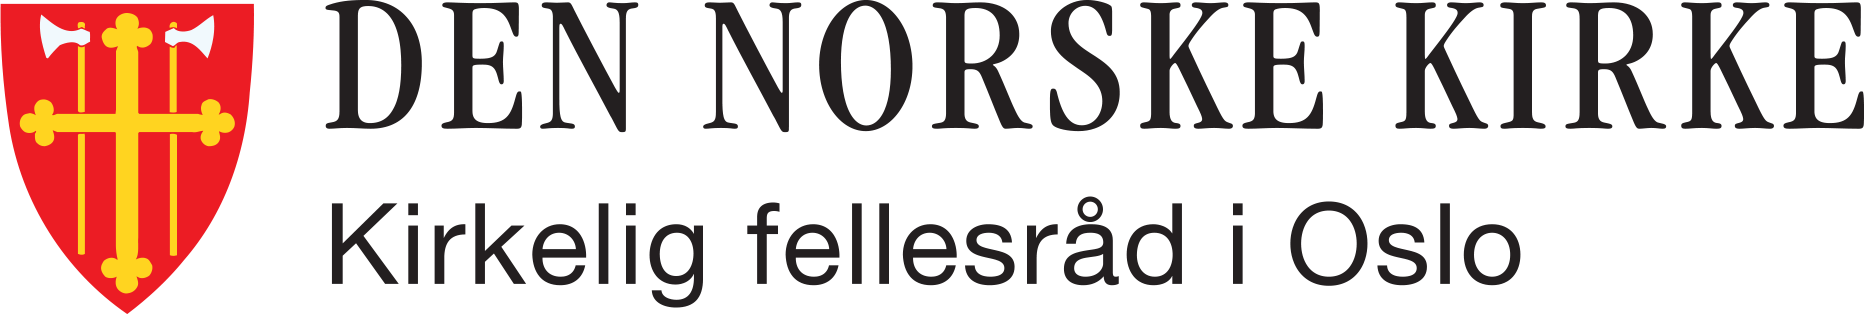 Kirkelig fellesråd i Oslo logo